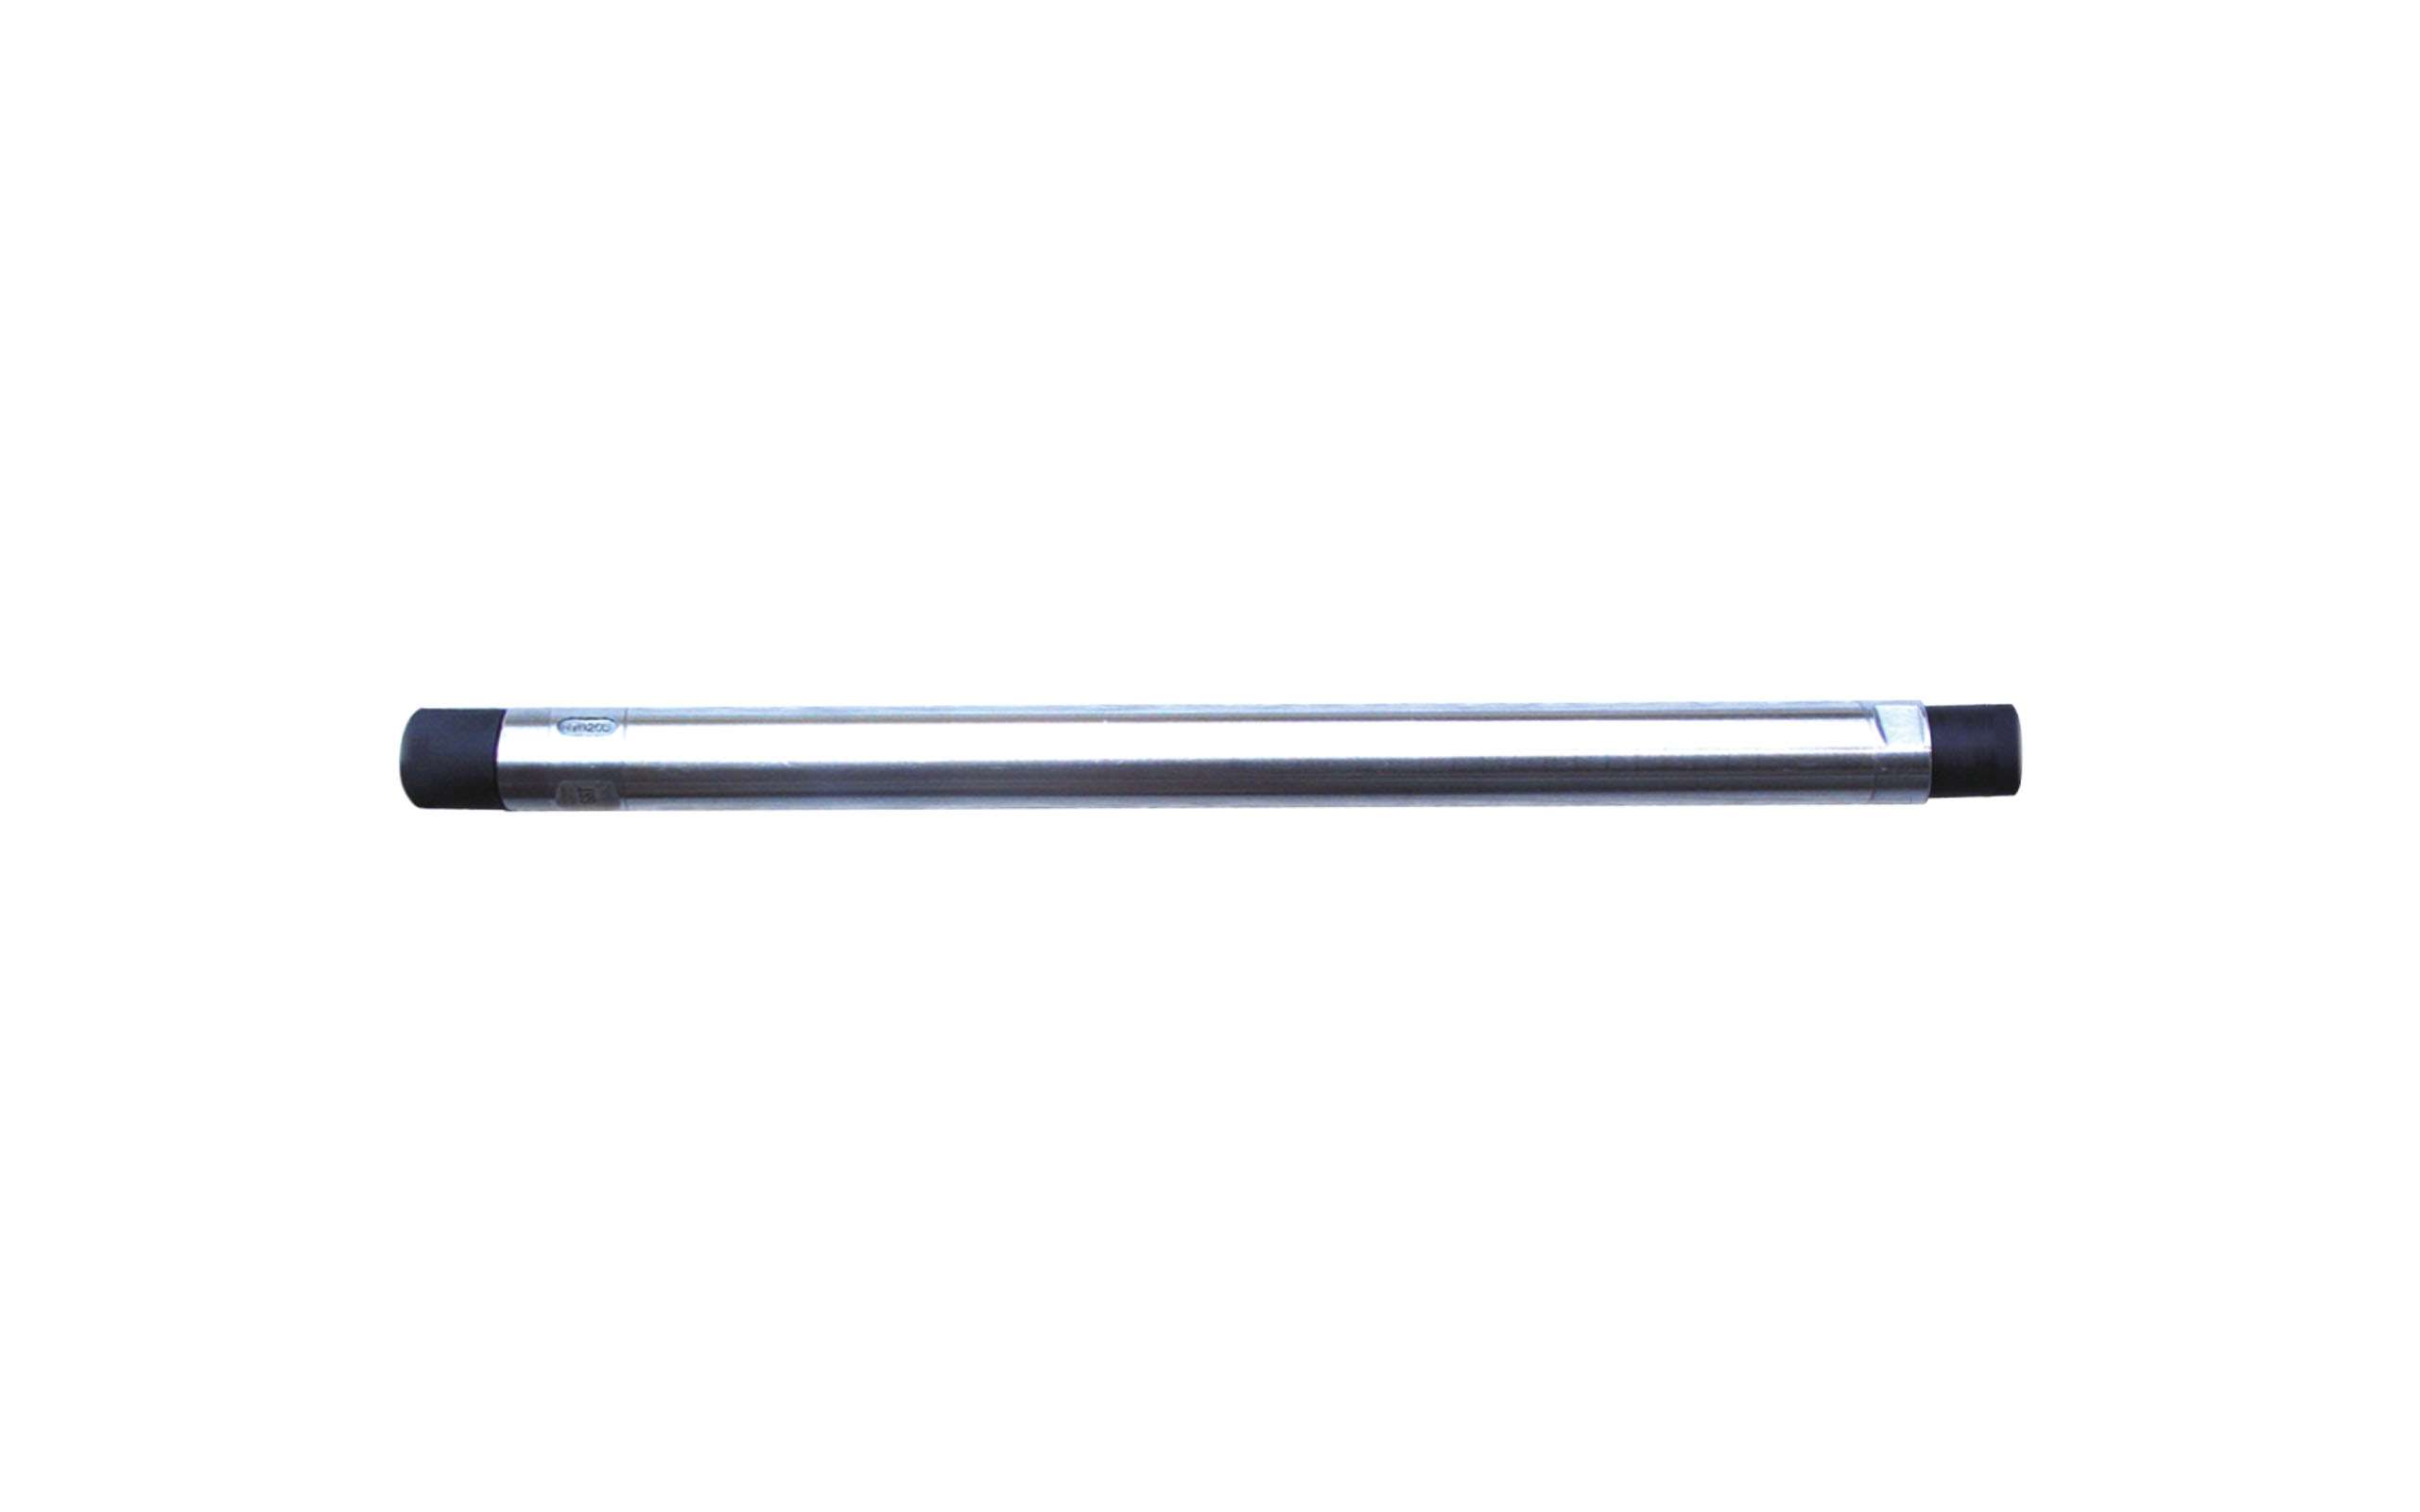 Long metal tube with black metal end caps